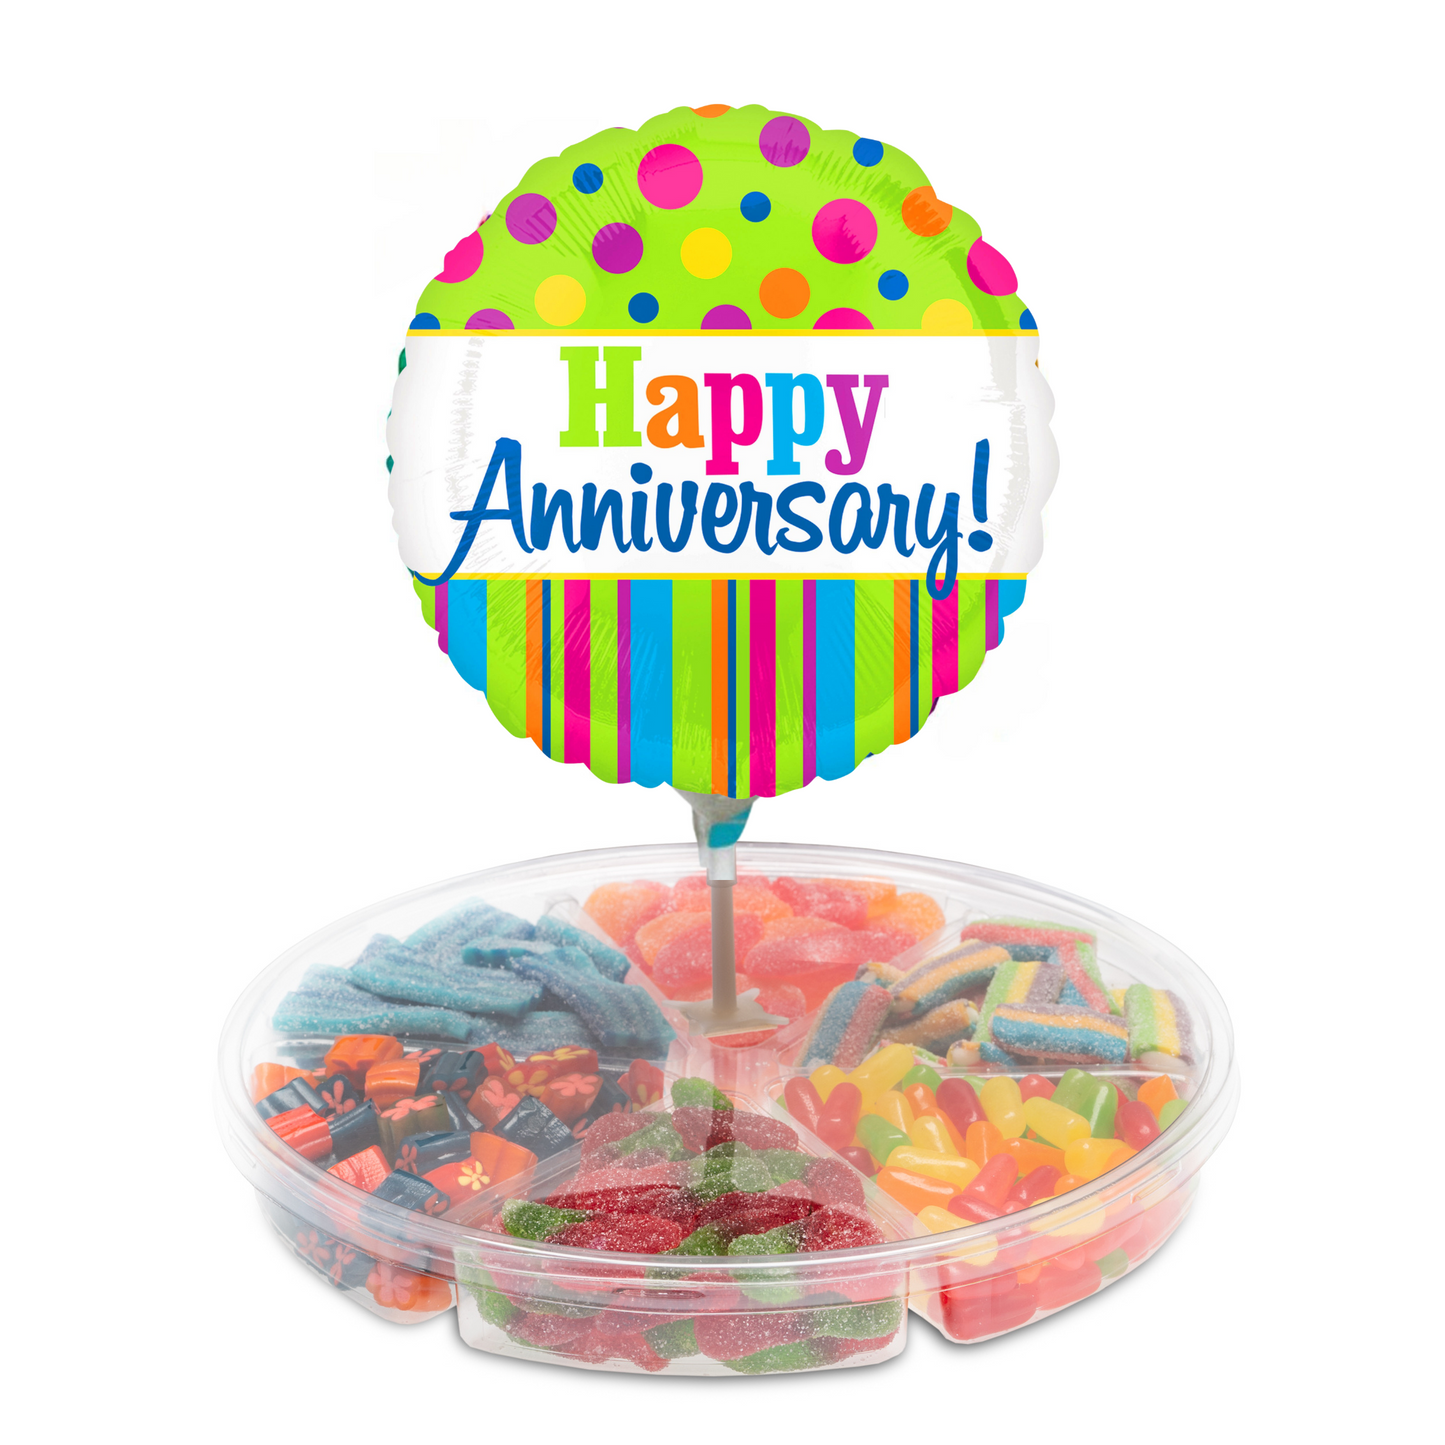 Medium Platter with Happy Anniversary Balloon